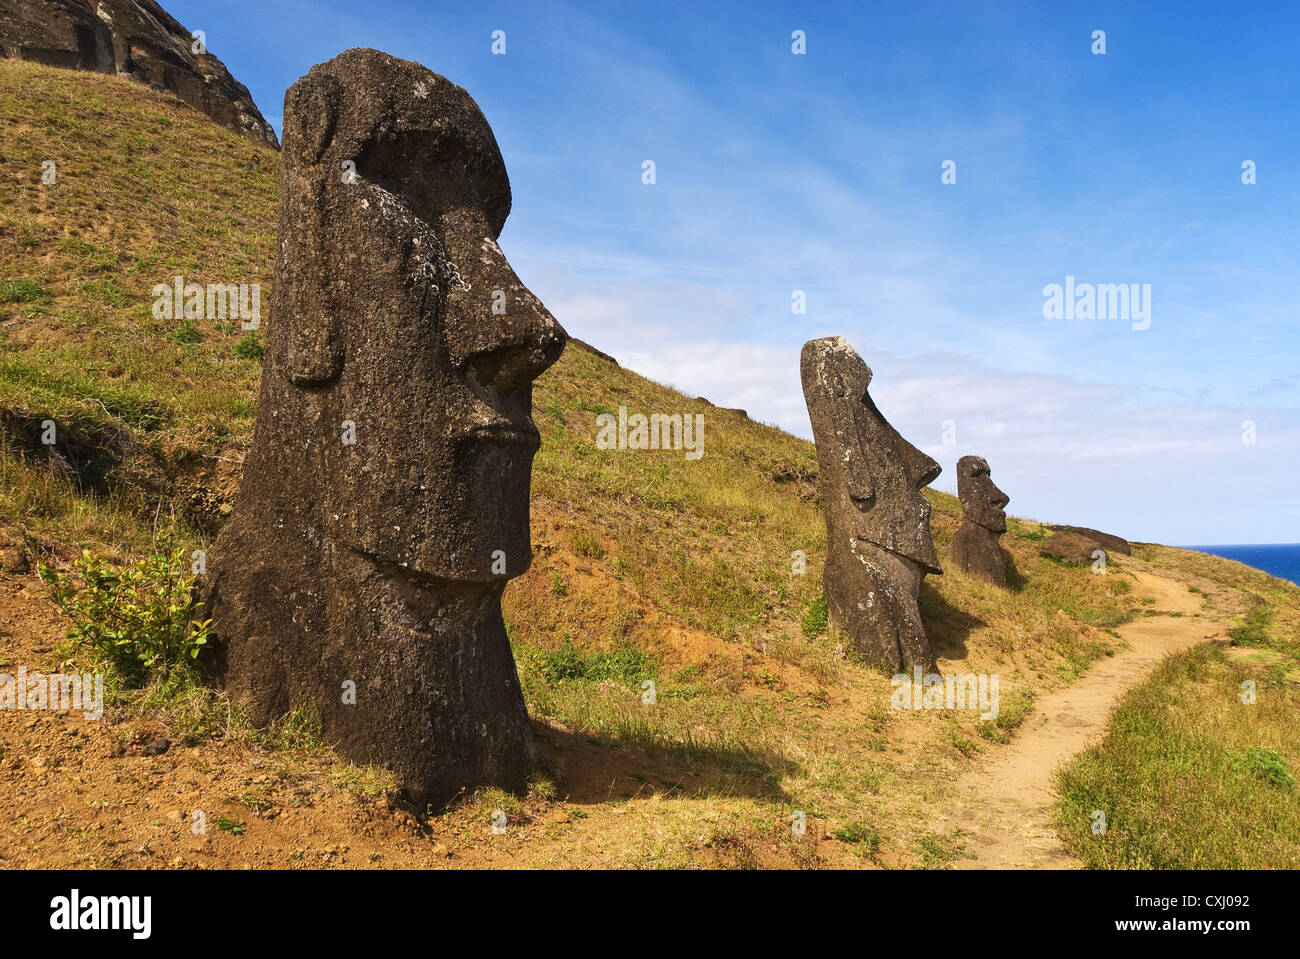 Elk198-5257 Cile, Isola di Pasqua, Rano Raraku, moai statue Foto Stock